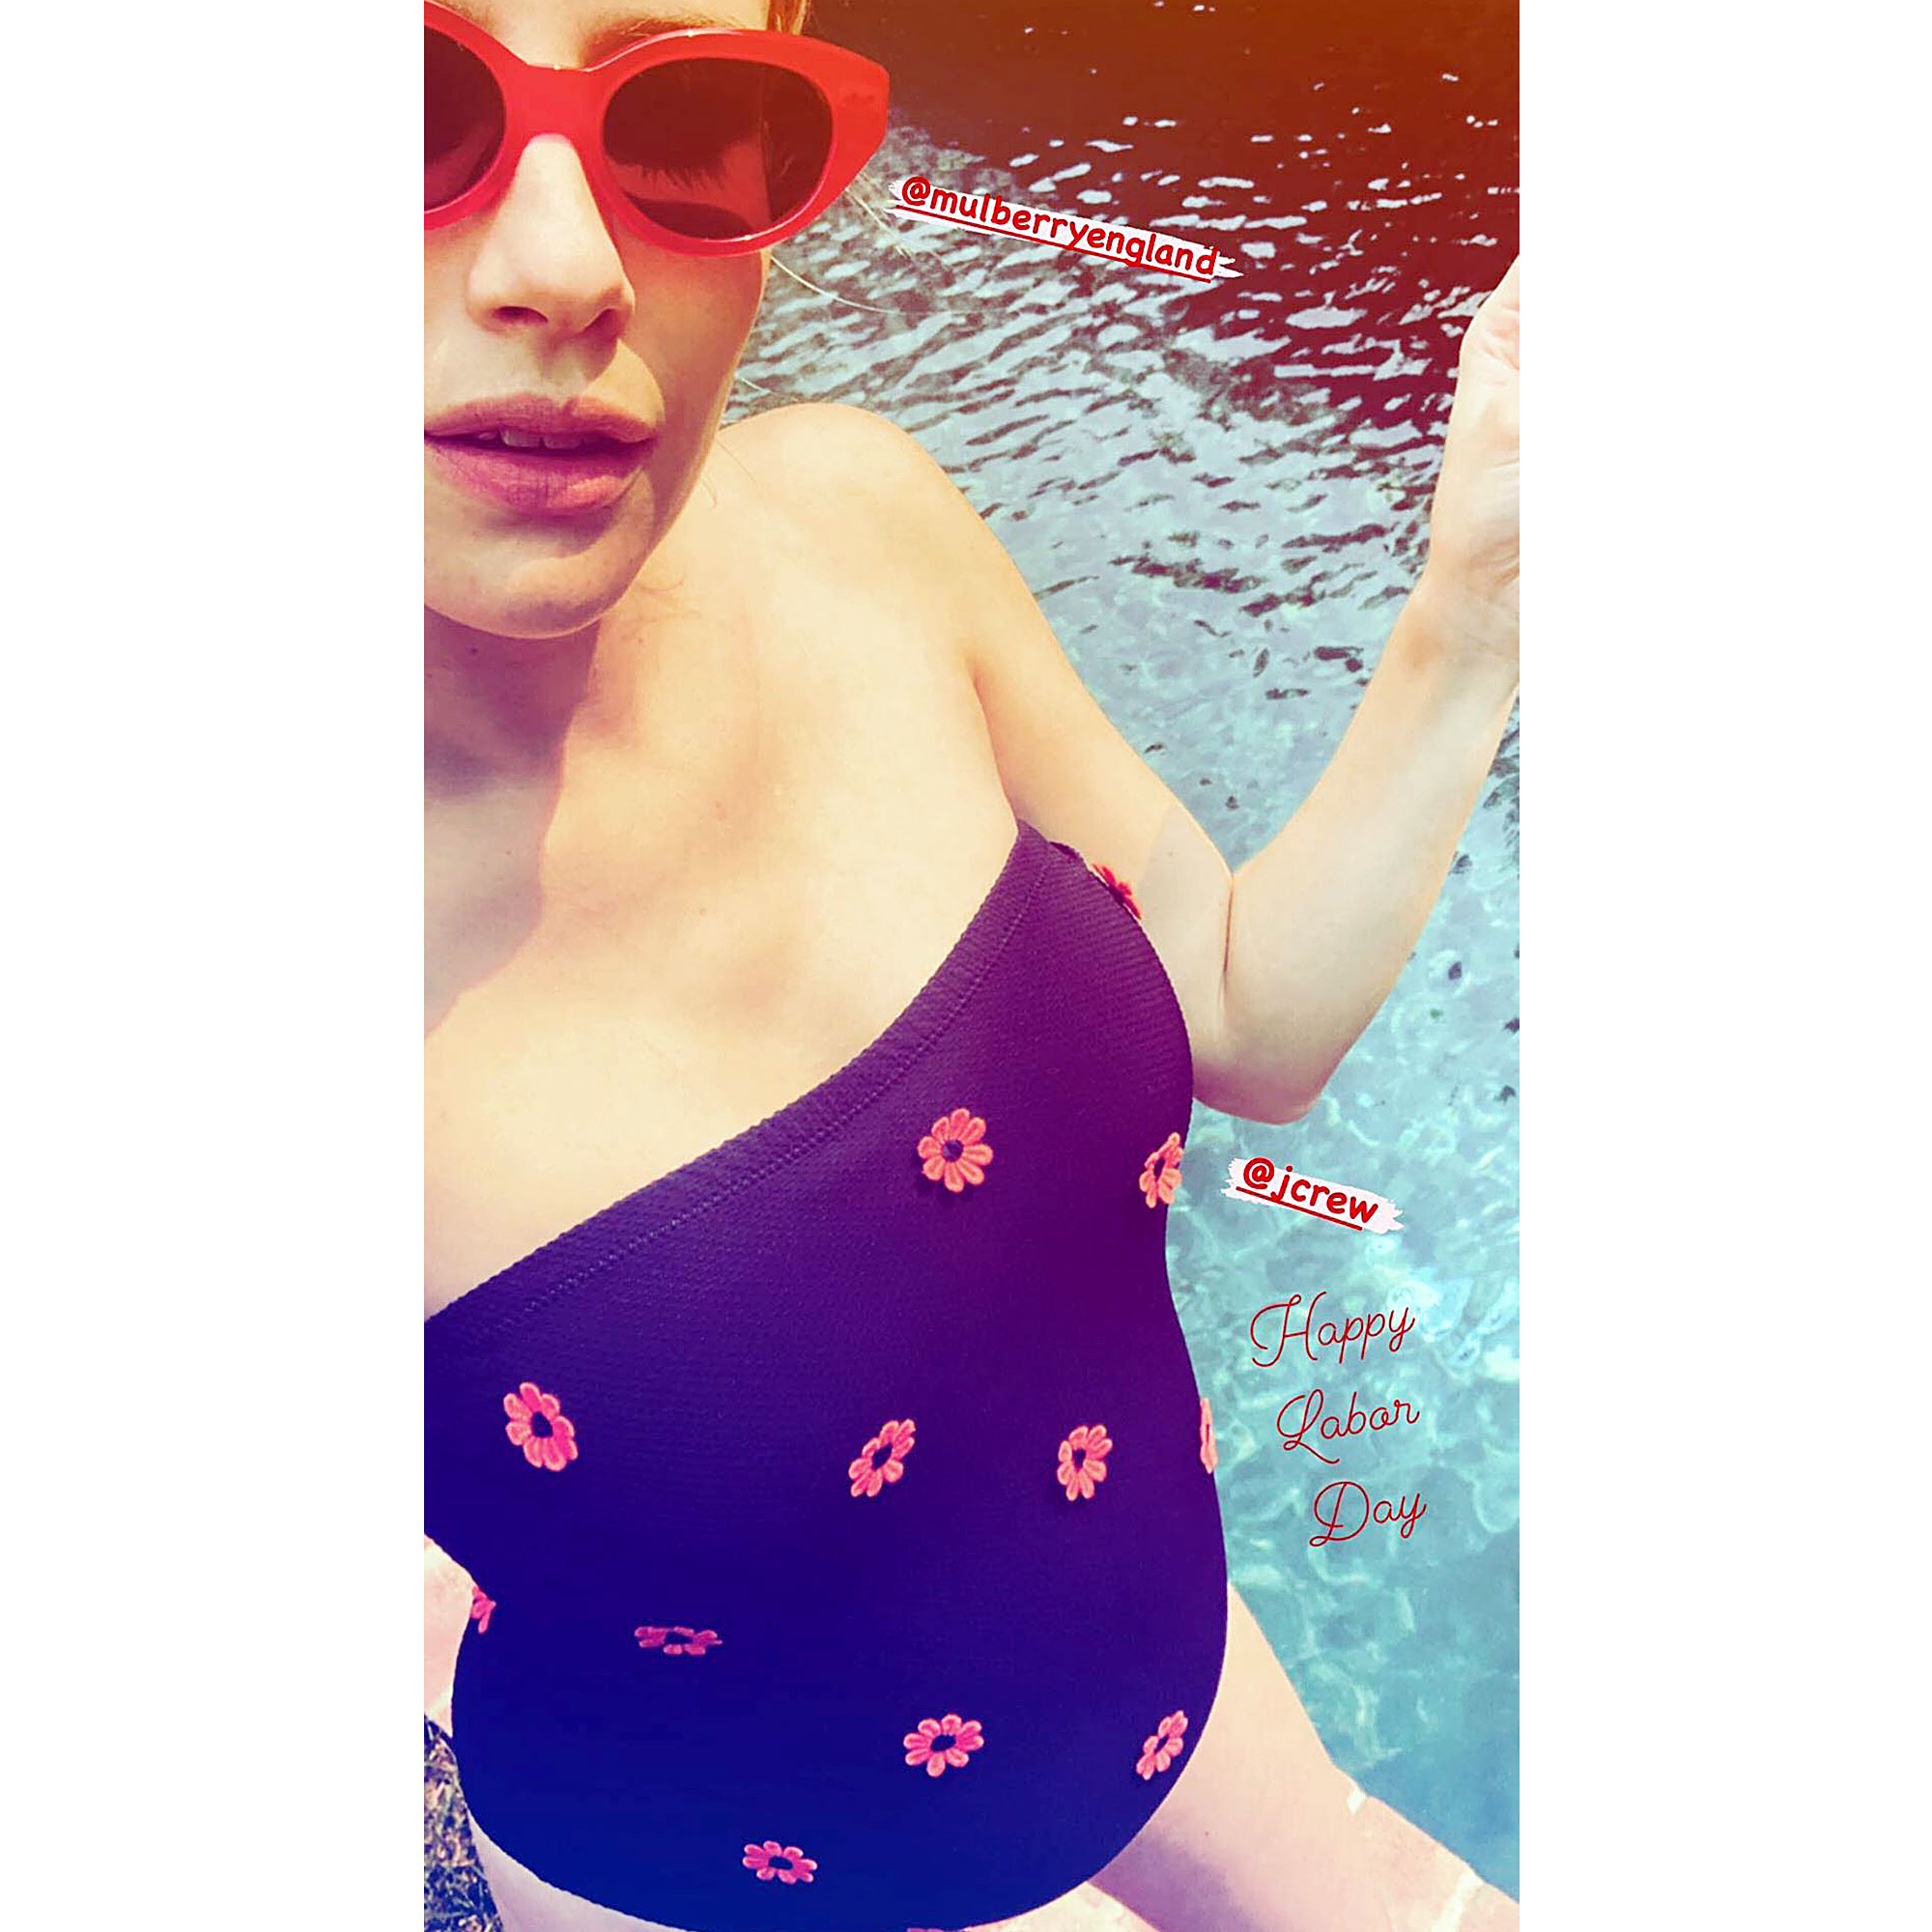 bryan gelman recommends Emma Roberts Bathing Suit